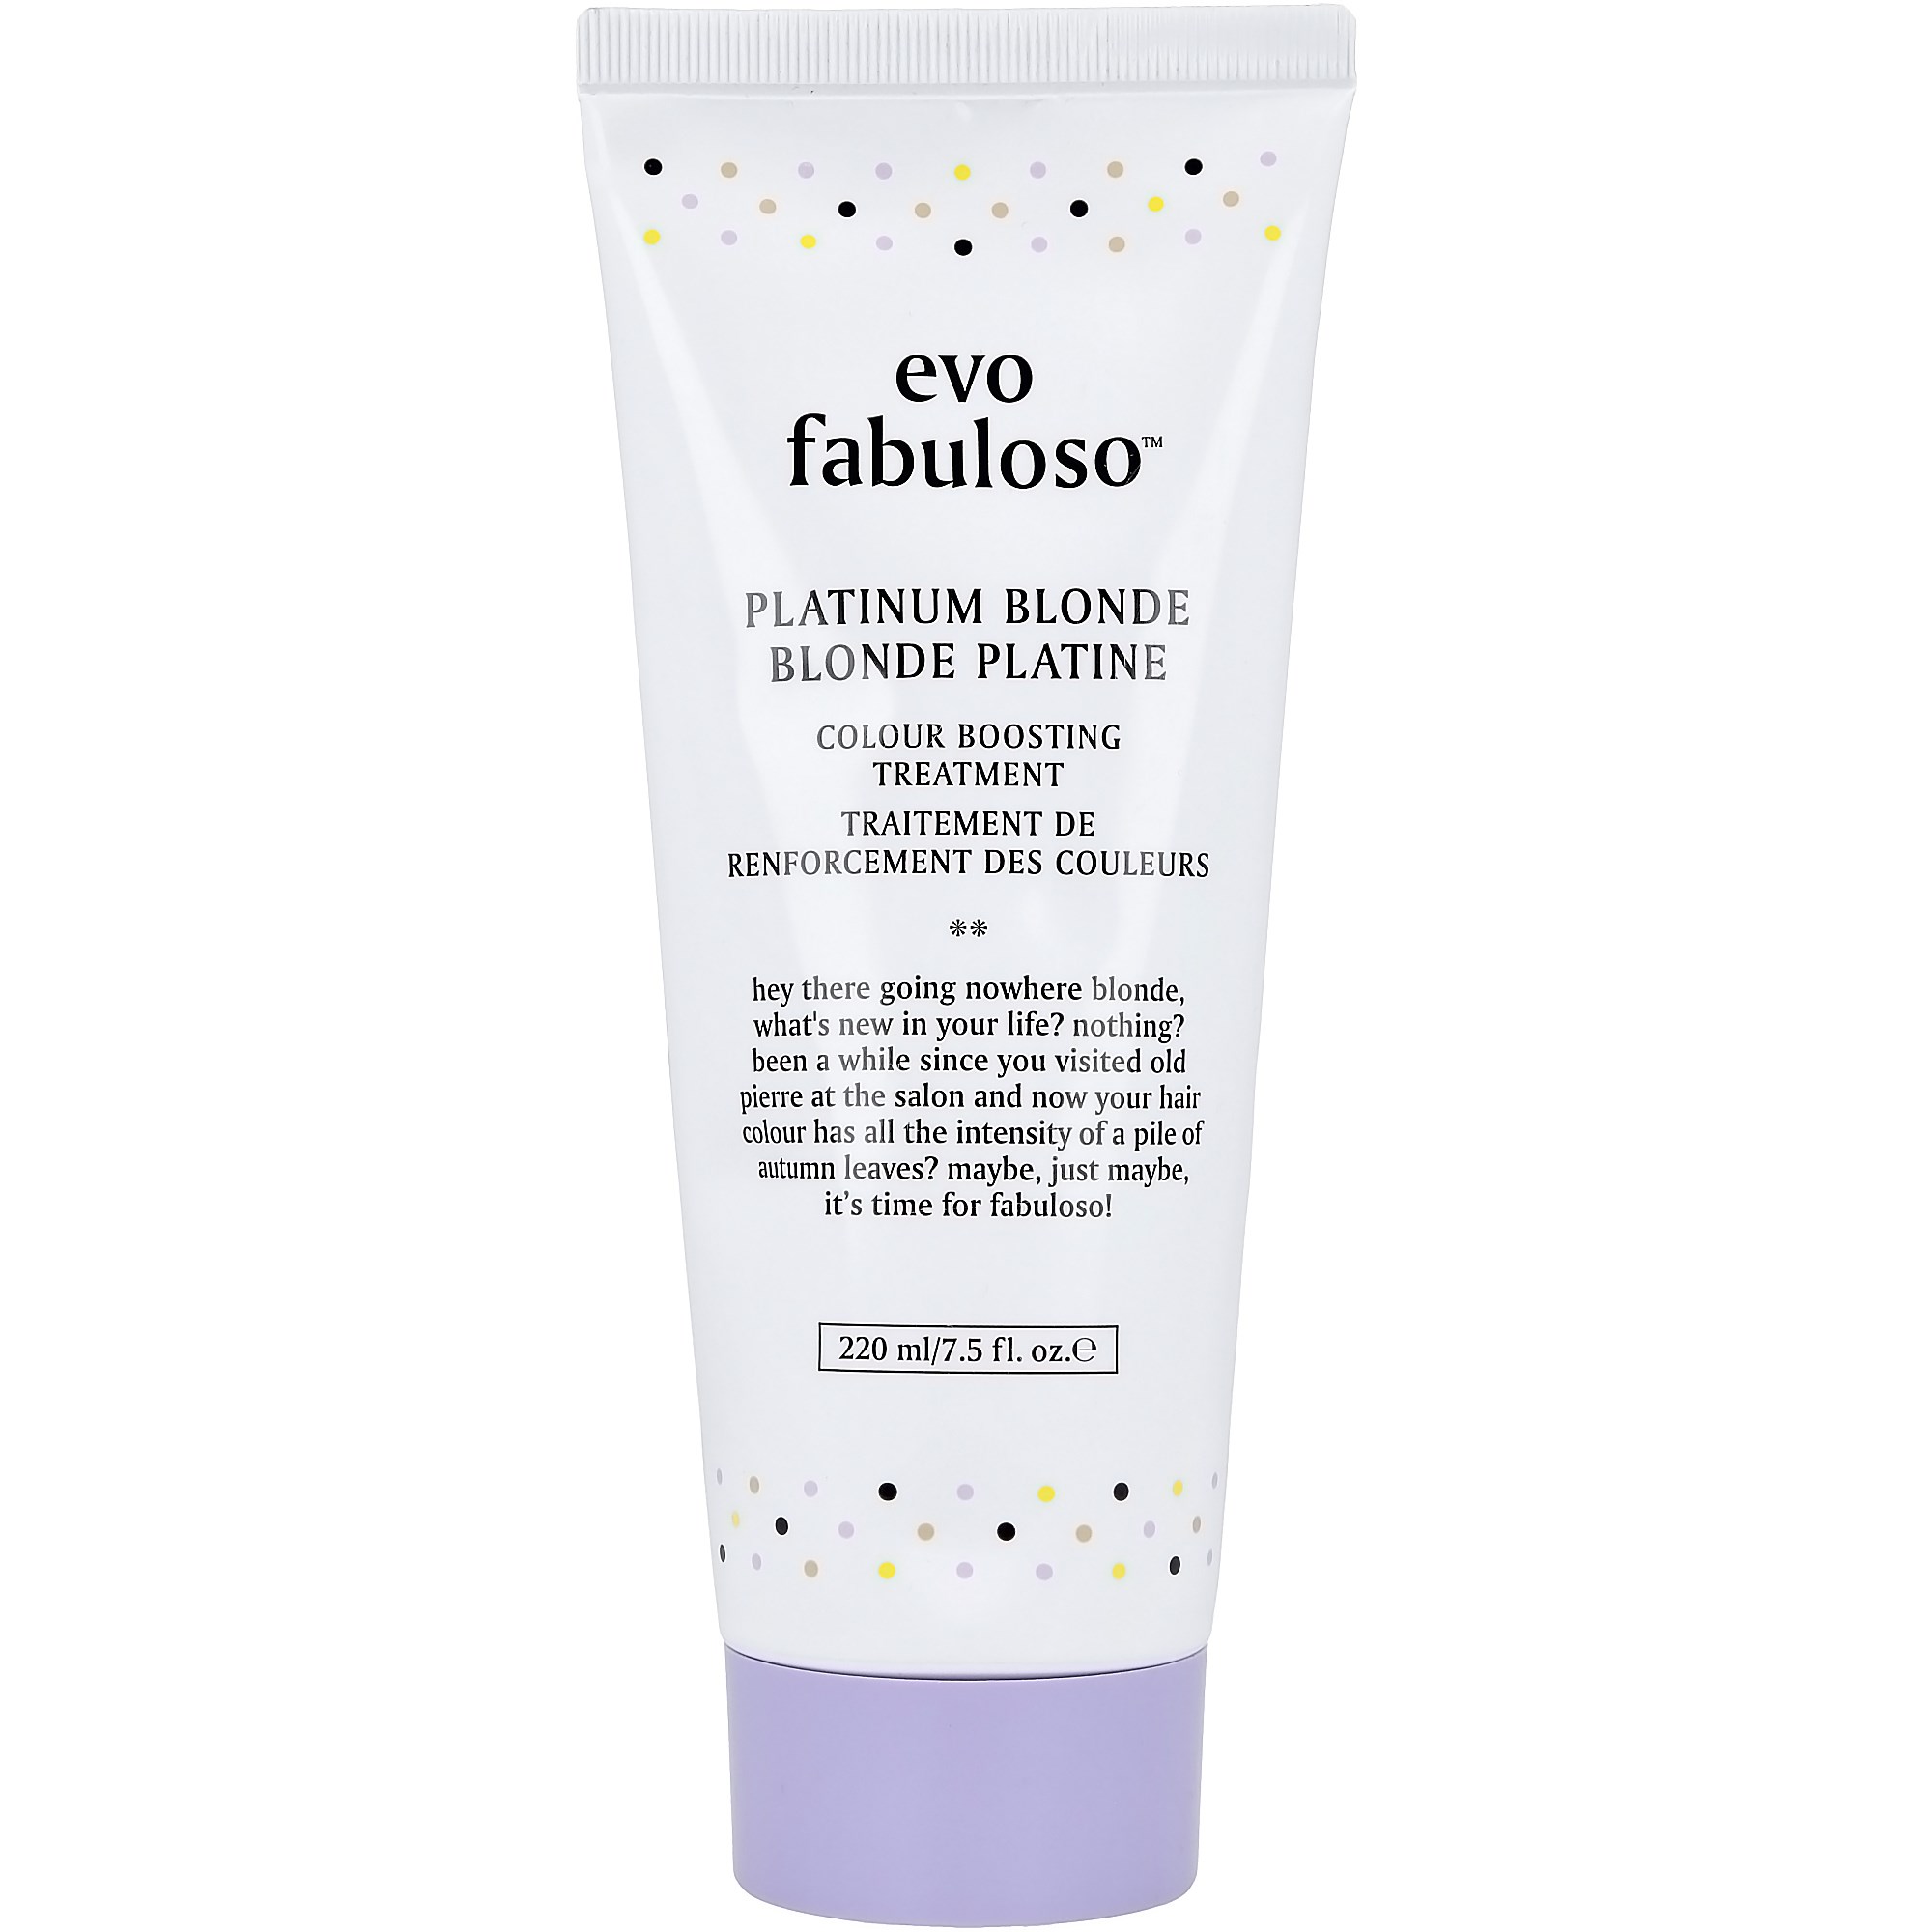 Bilde av Evo Fabuloso Colour Boosting Treatment Platinum Blonde